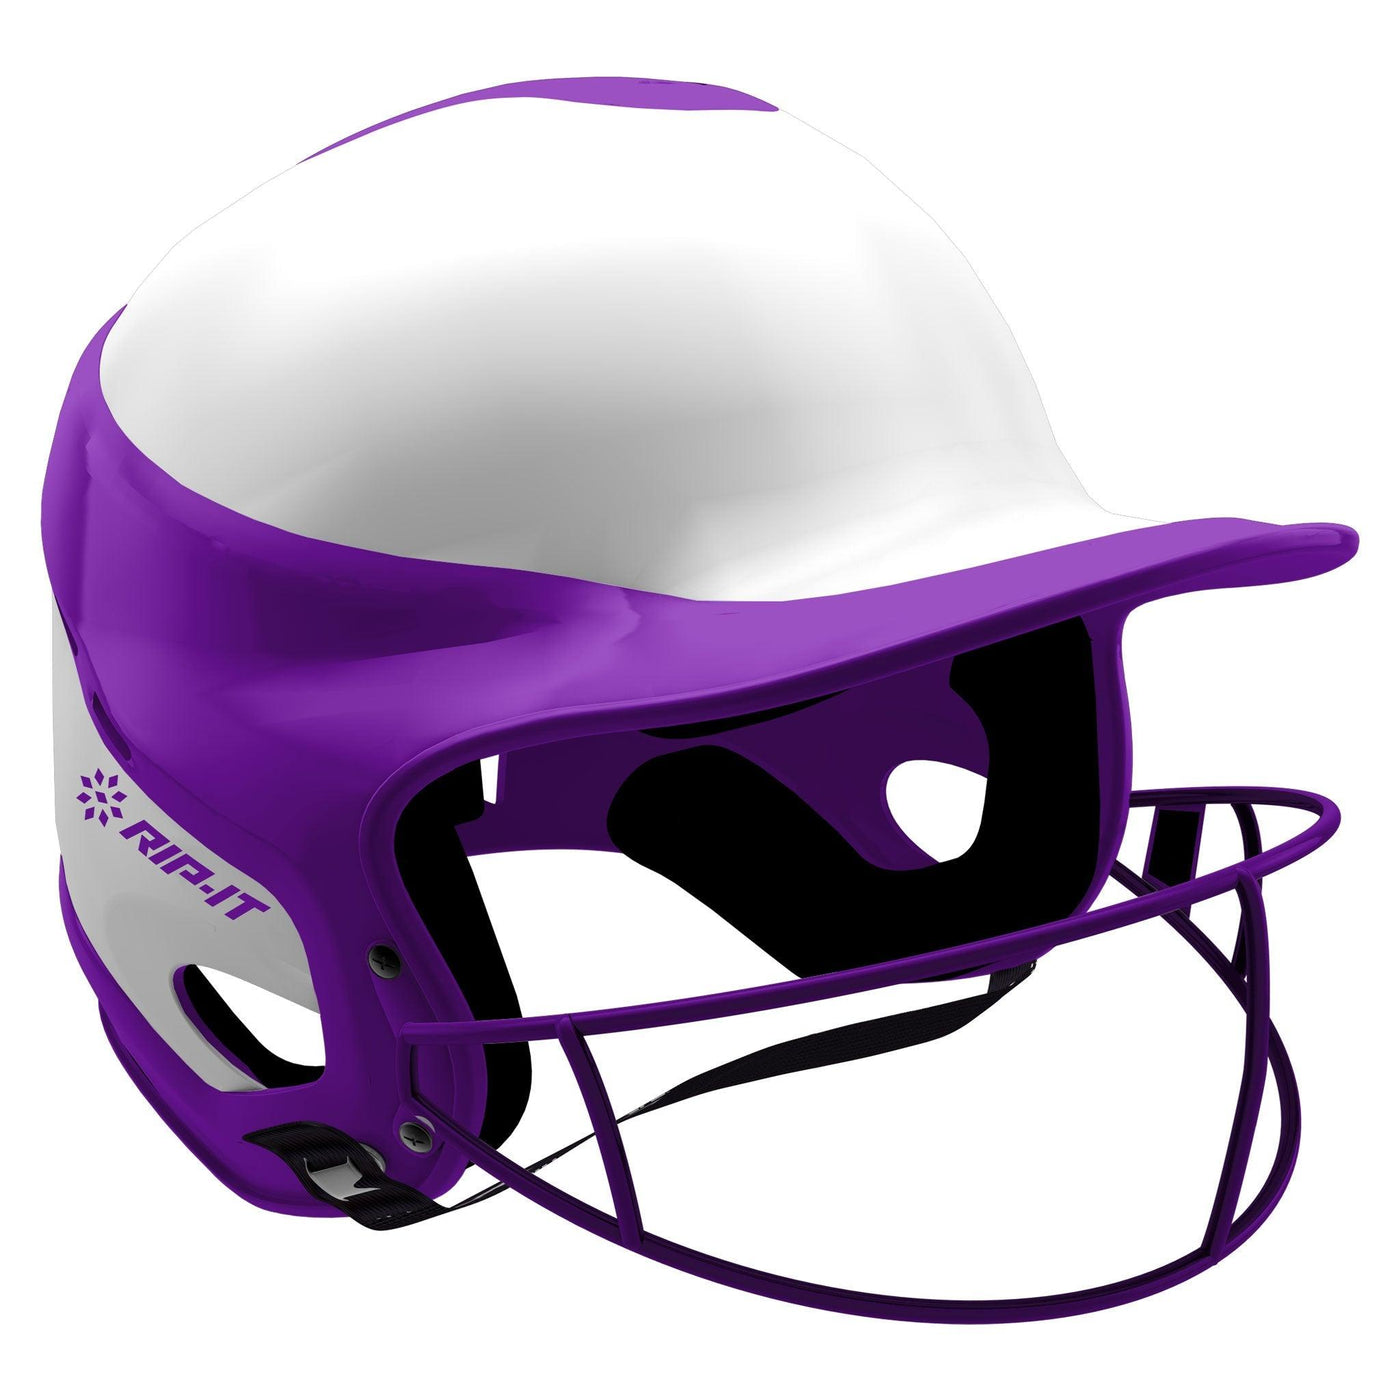 Vision Pro Softball Helmet - Gloss - Closeout - RIP-IT Sports